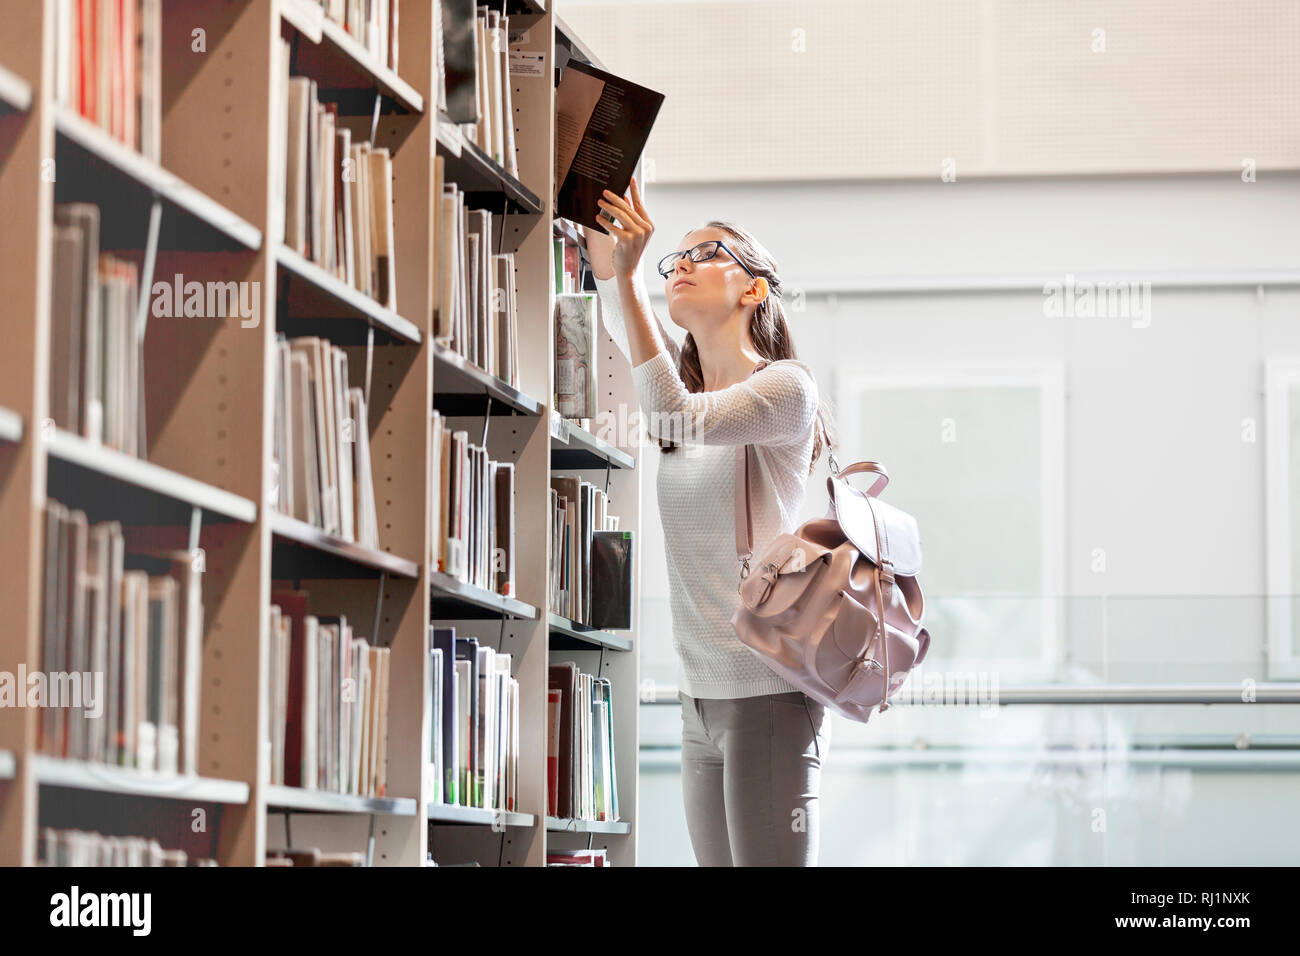 Student choosing book at university library Stock Photo